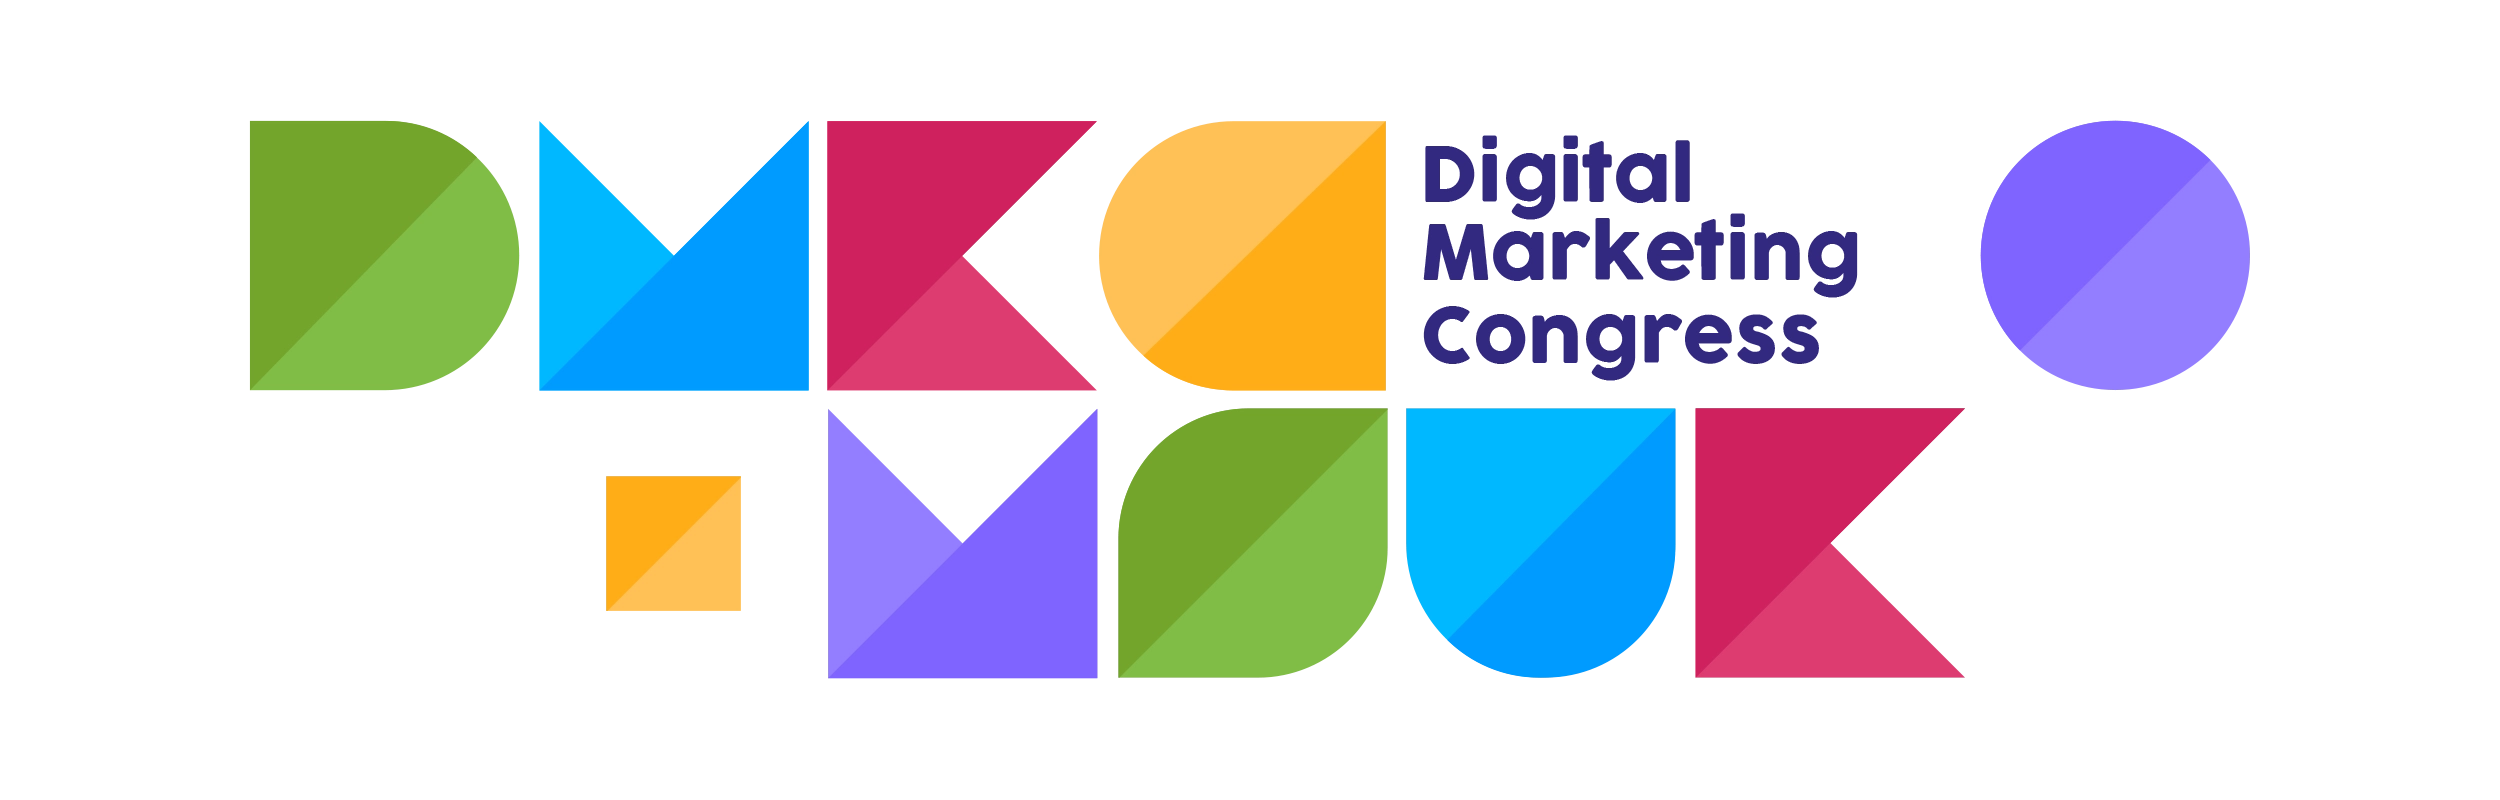 Digital Marketing Congress - Treche Studio